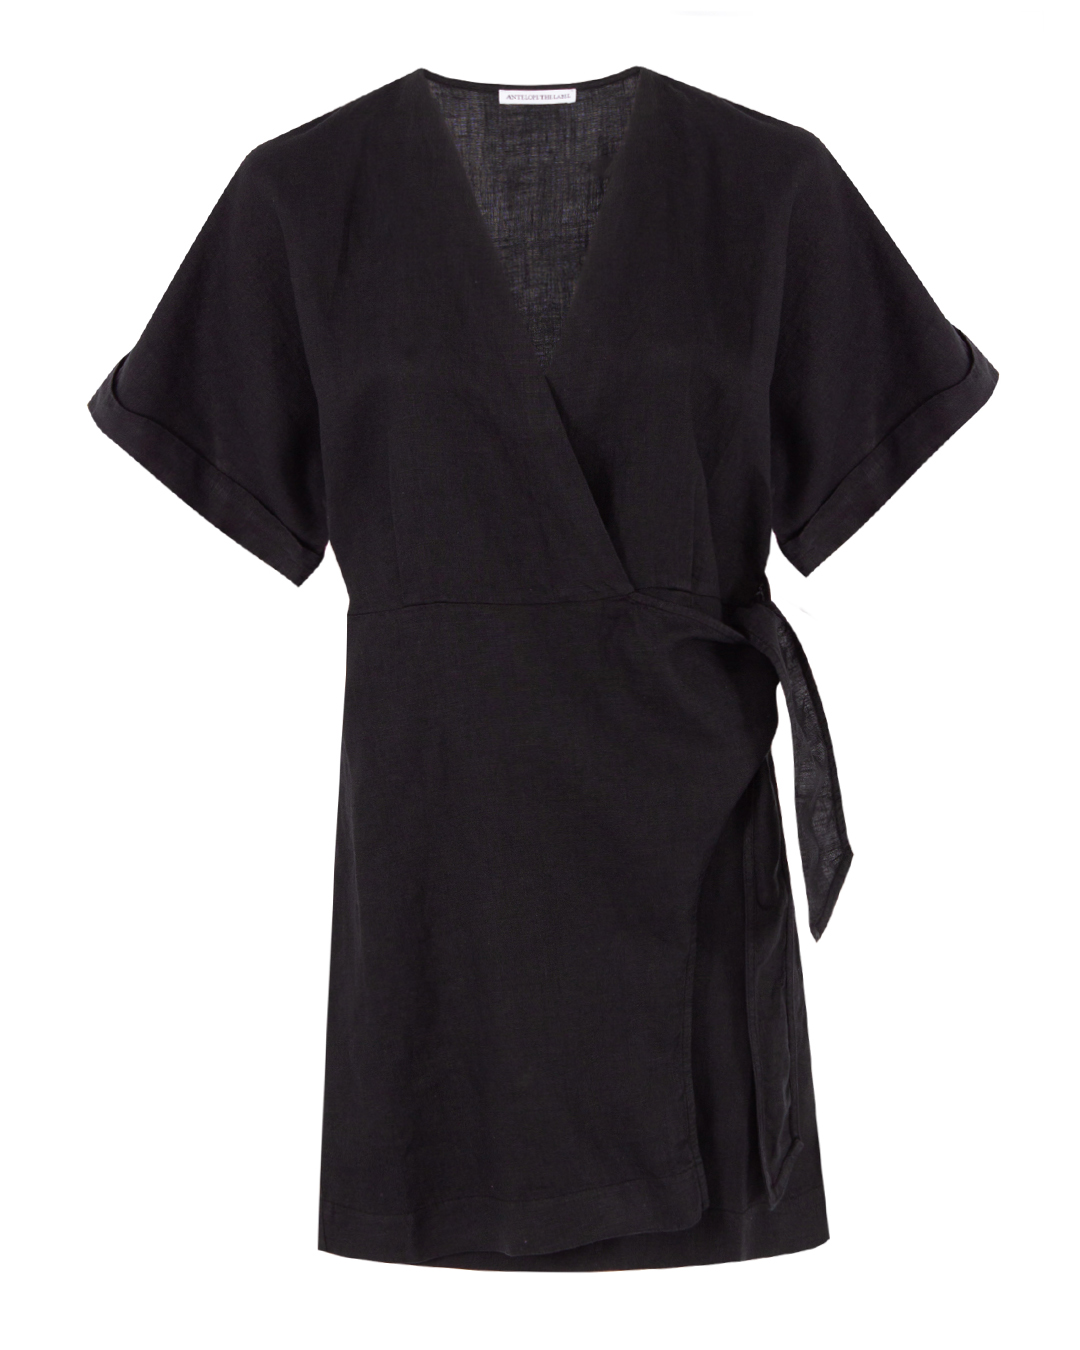 платье ANTELOPE THE LABEL D1.BLACK черный s/m, размер s/m